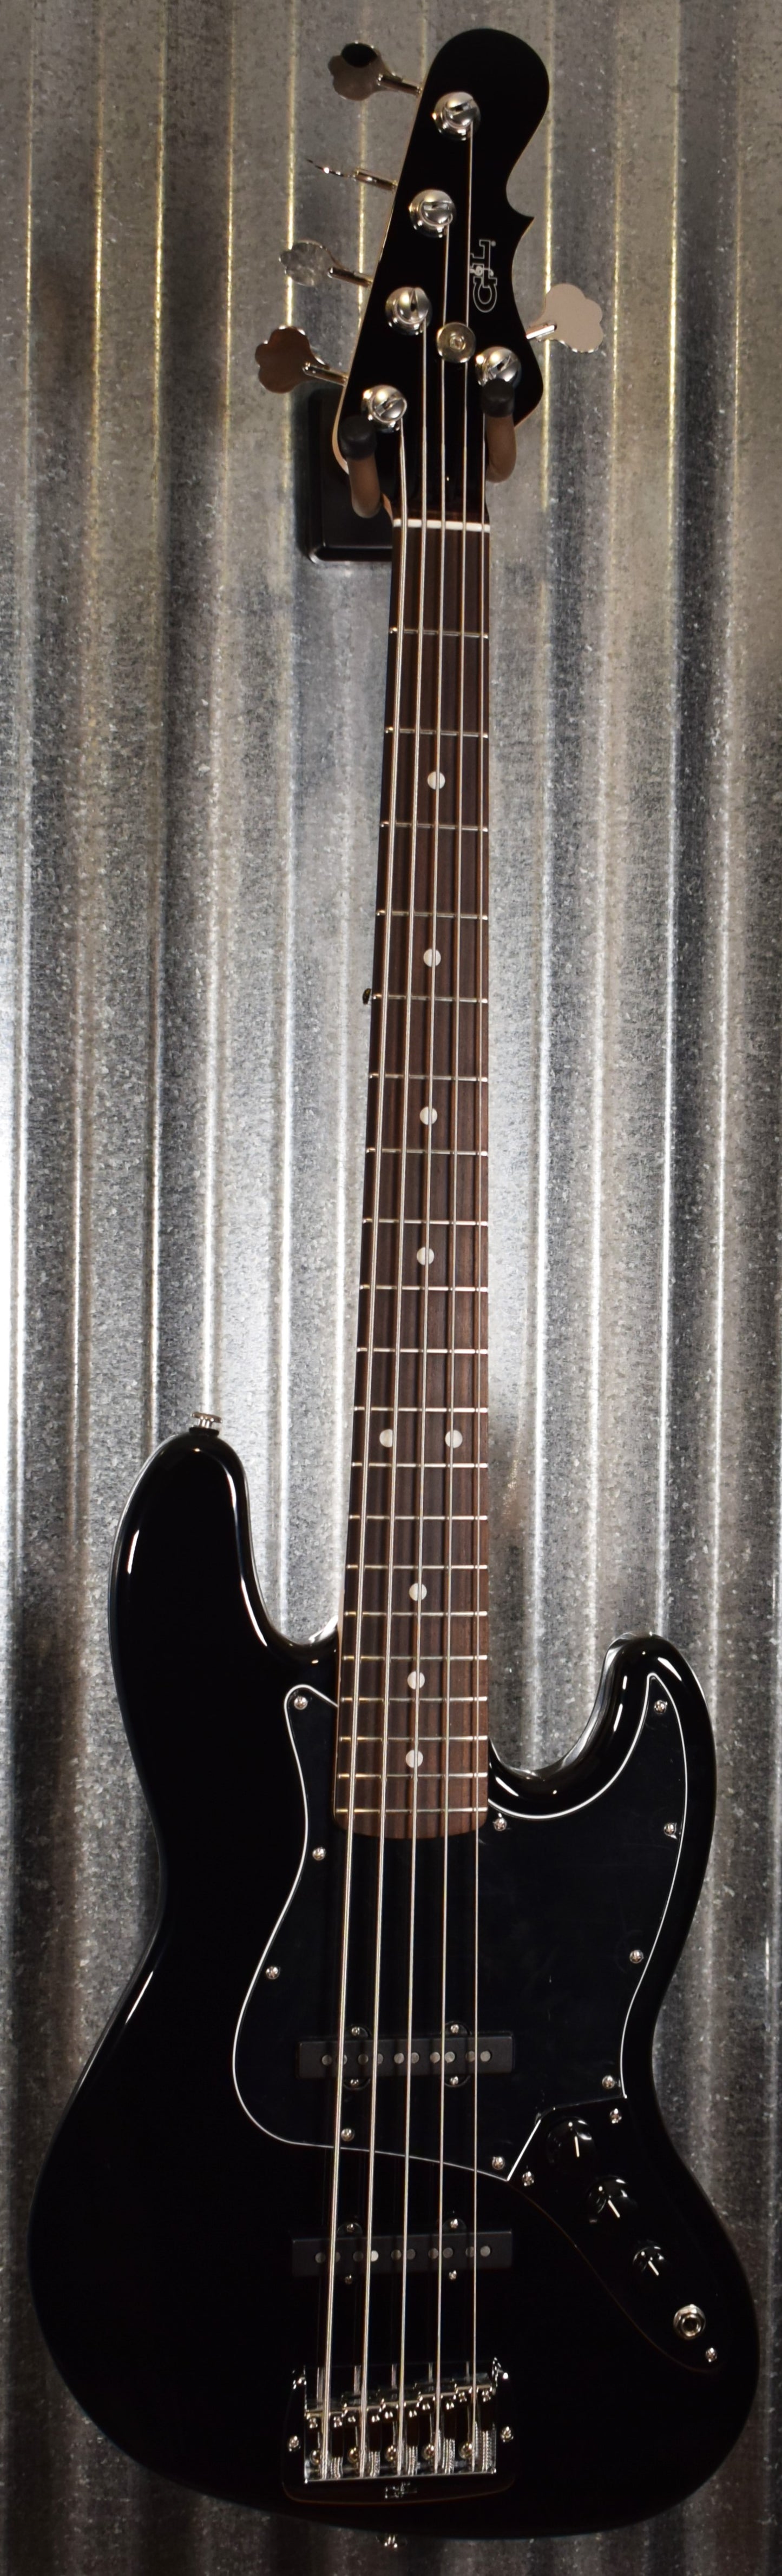 G&L USA JB-5 Jet Black 5 String Jazz Bass Rosewood Satin Neck & Case #6089